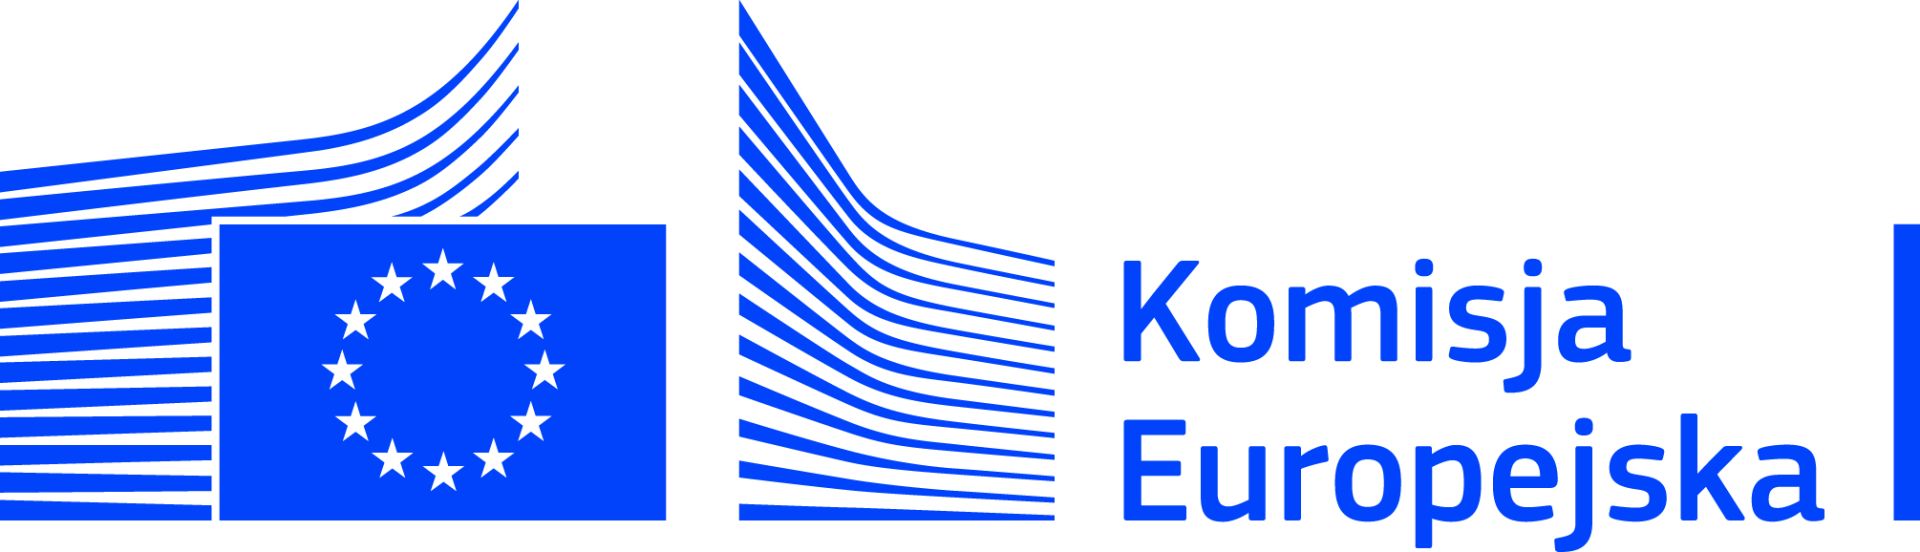 logo programu